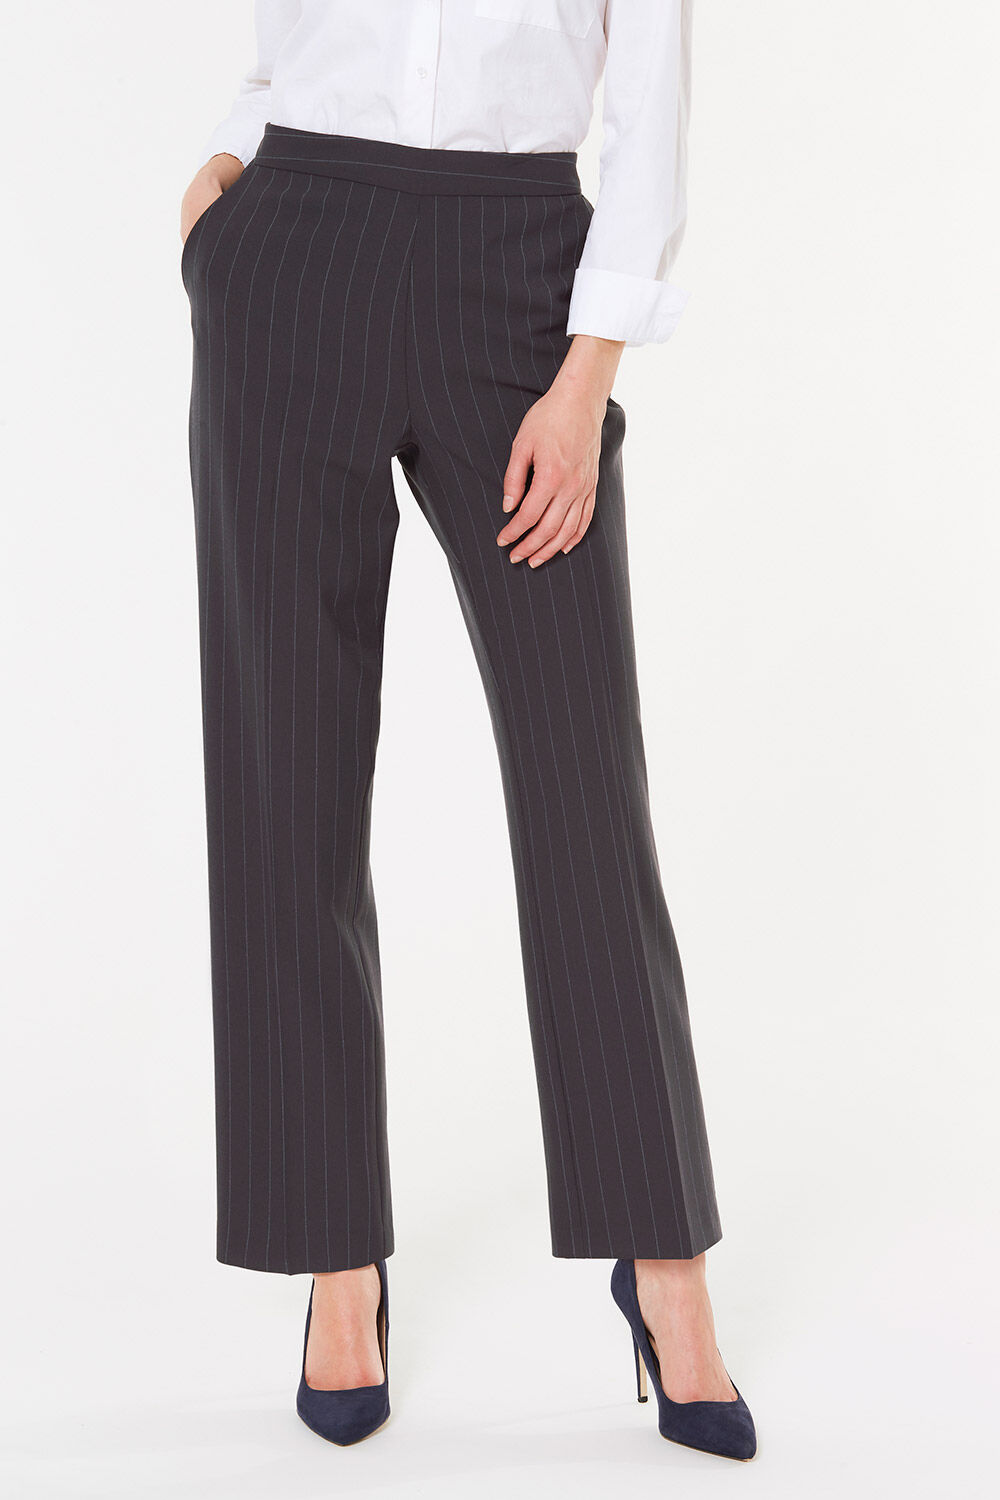 Bonmarche Classic Straight Leg Stripe Pull On Trouser - Navy, Size: 24